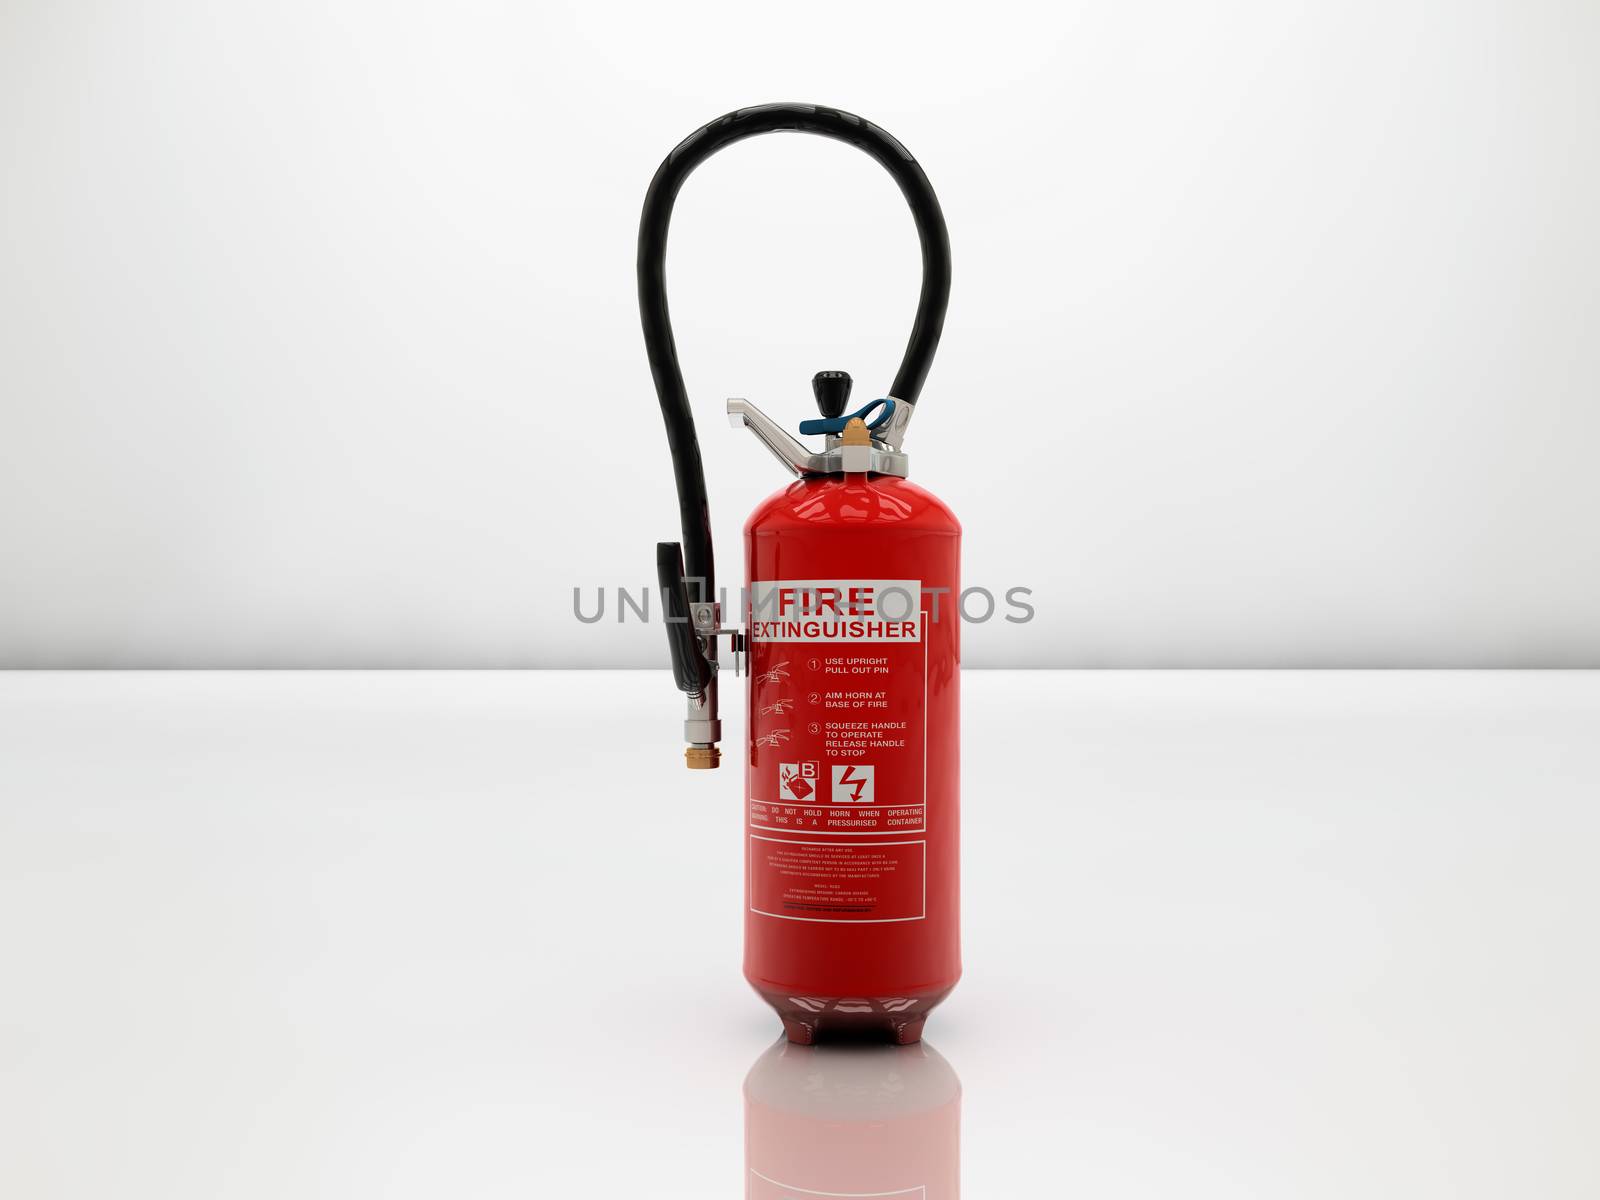 Extinguisher on white by dynamicfoto